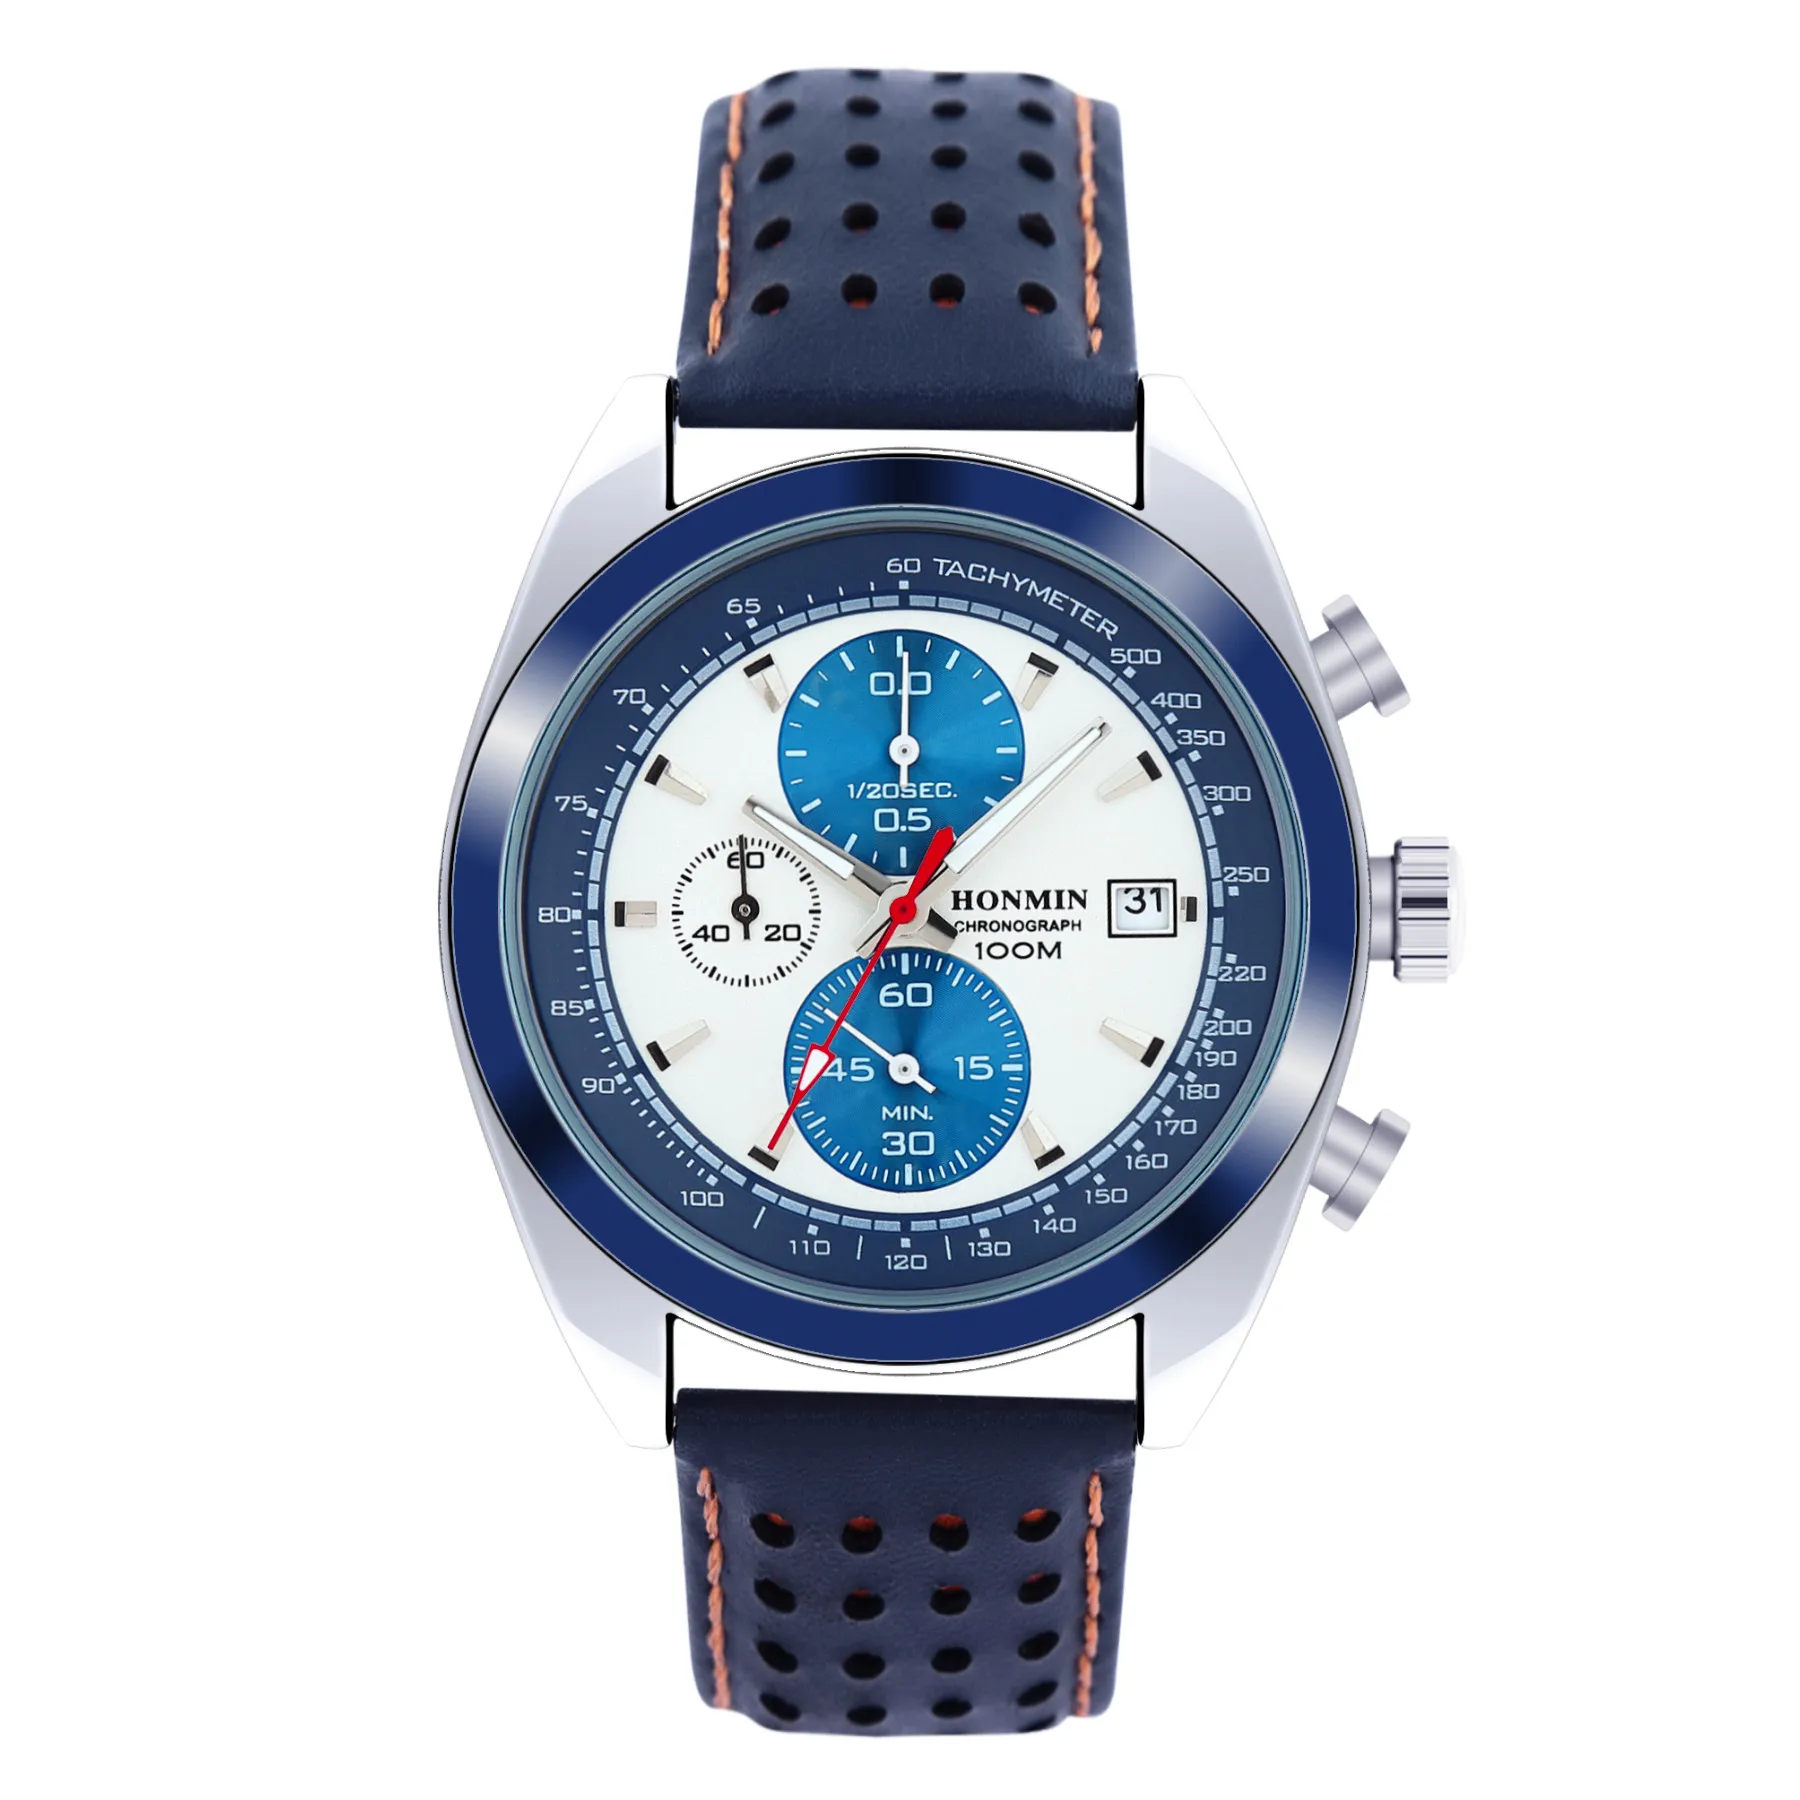 

New honmin genuine multifunctional waterproof watch men's watch Six needle timing retro business watch luxury watch